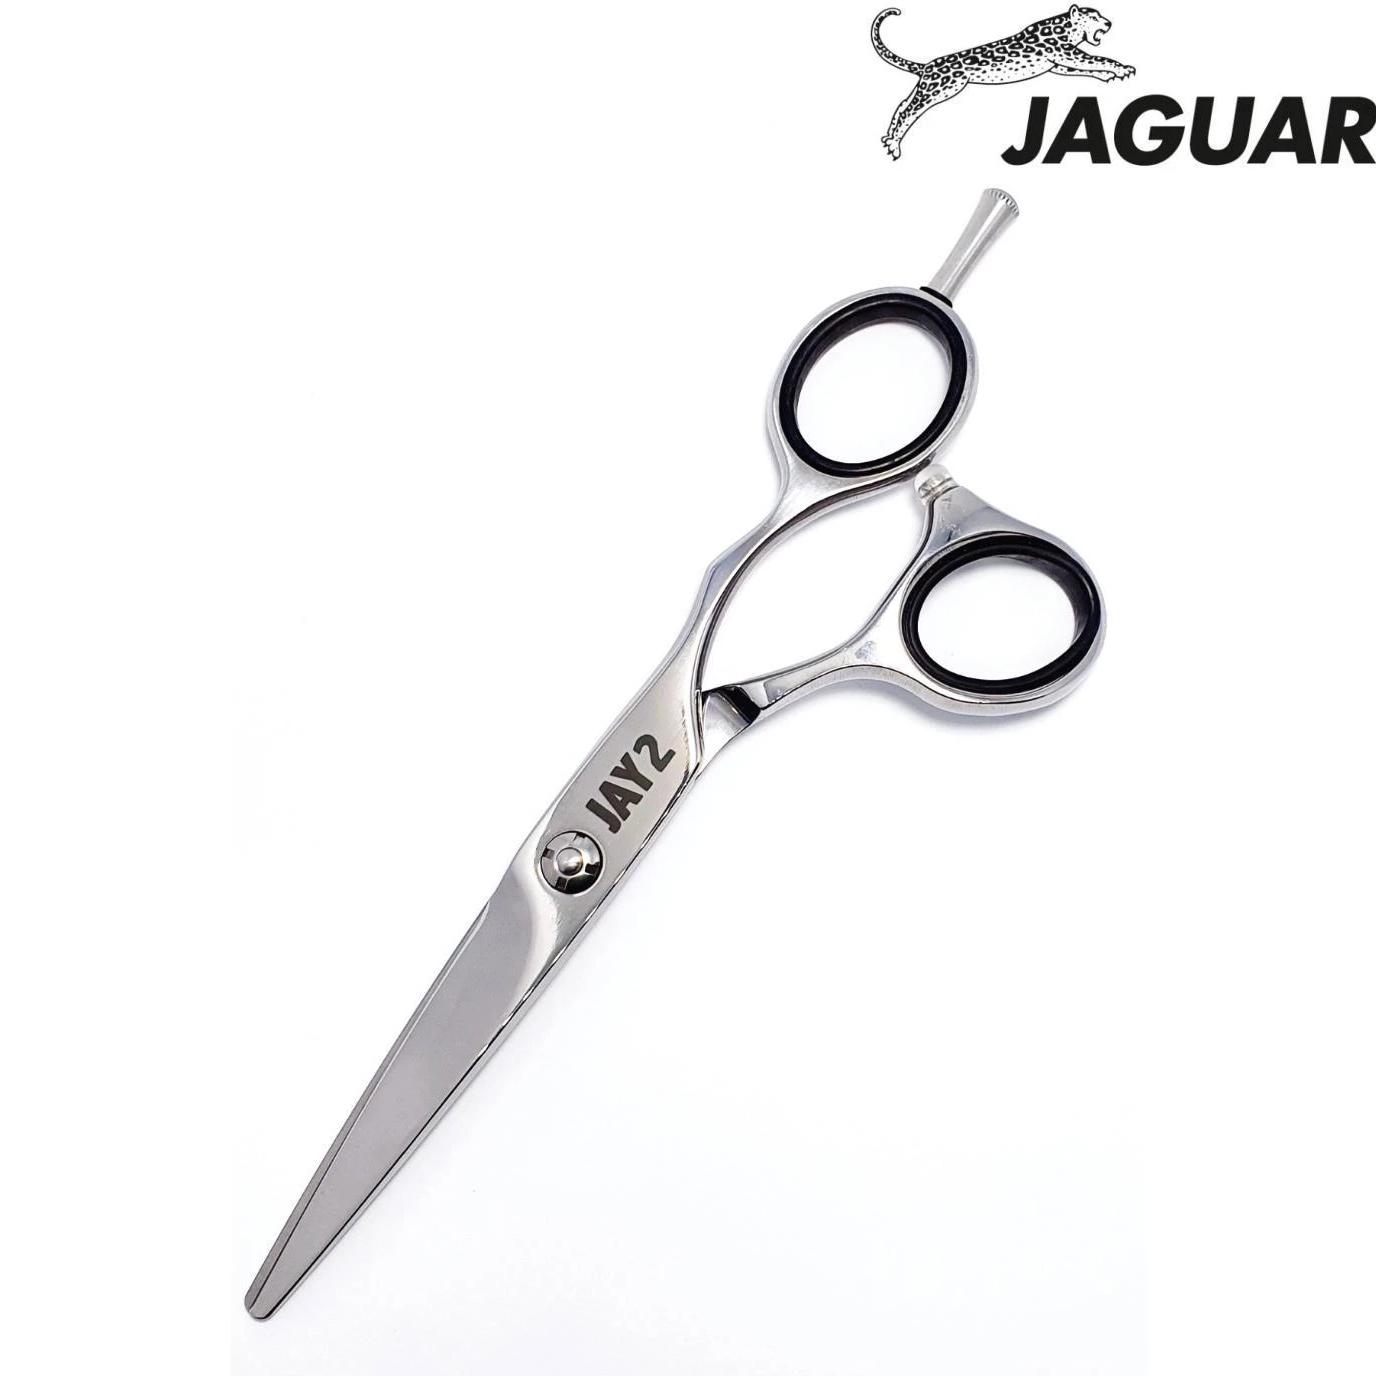 The popular home-use Jaguar Germany Jay2 scissor